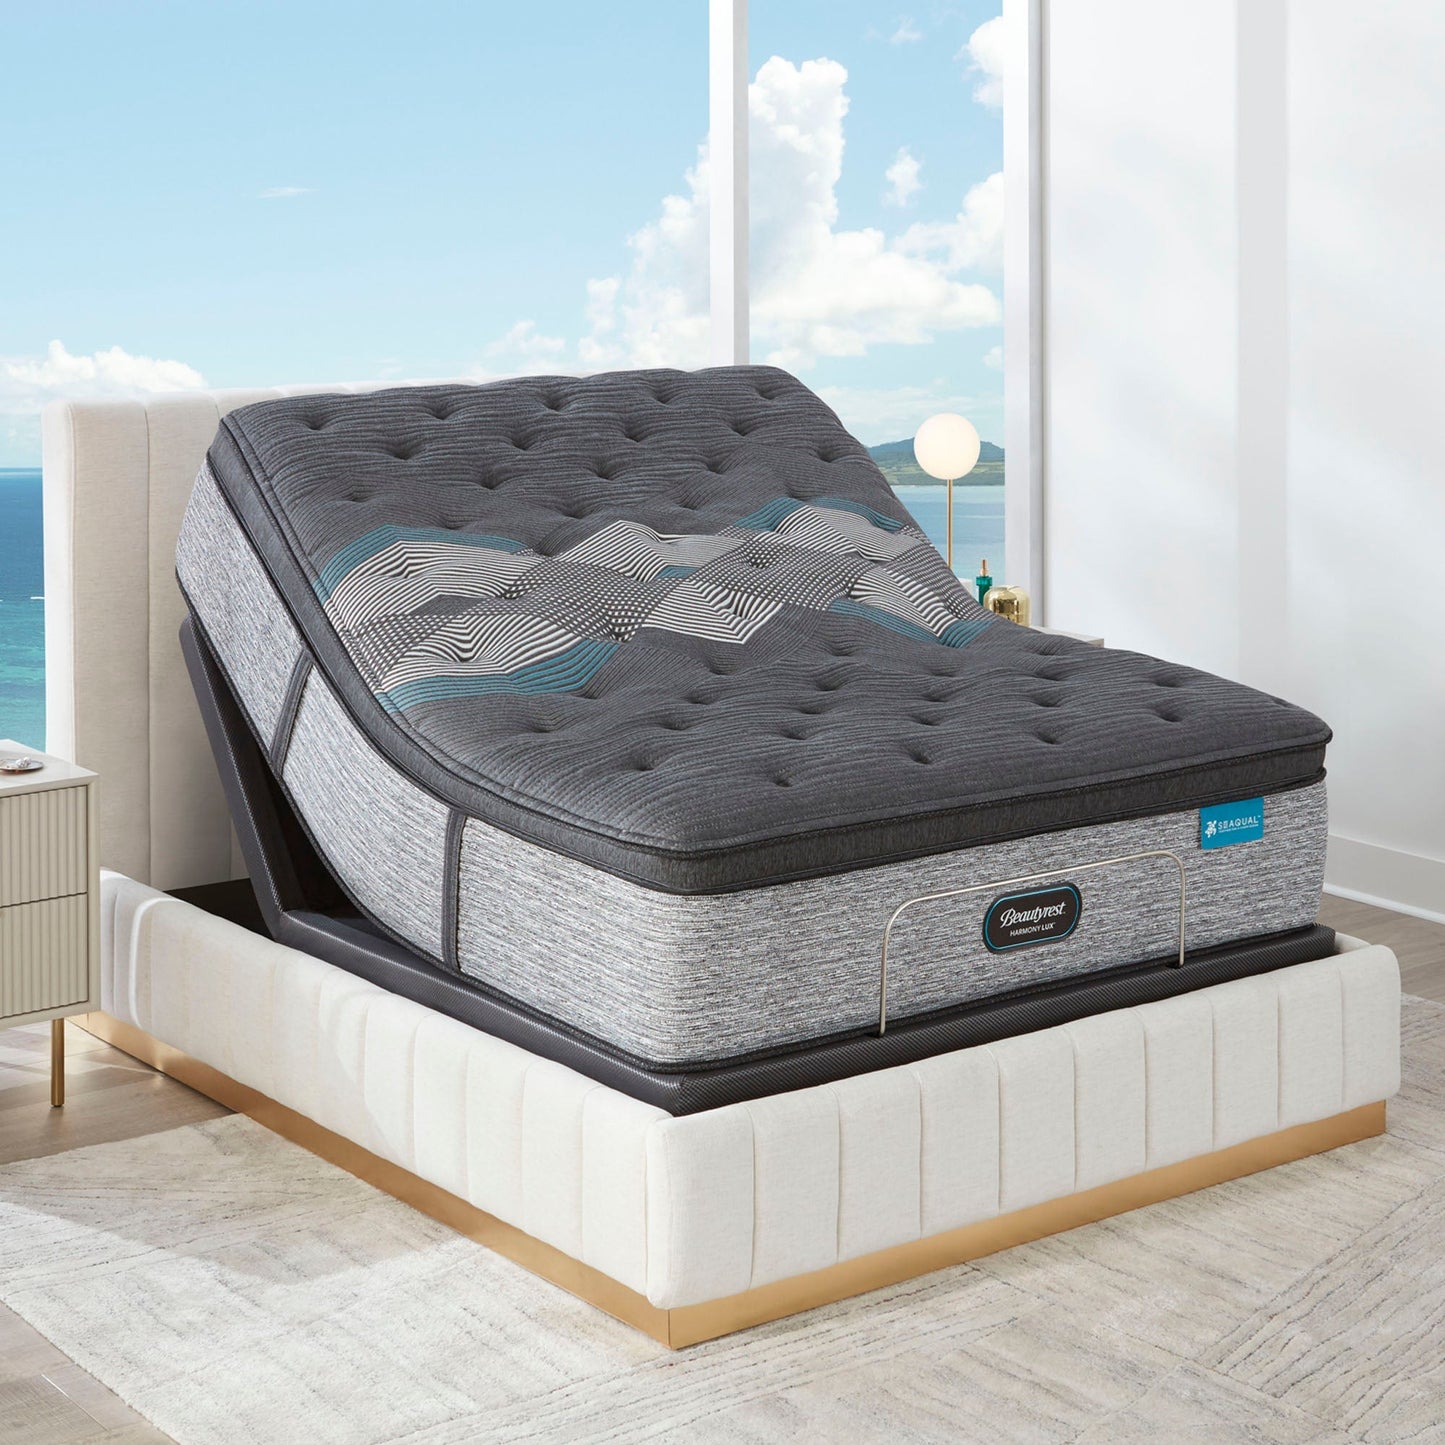 Beautyrest Harmony Lux Diamond Series Ultra Plush Pillowtop Mattress On Adjustable Base In Bedroom